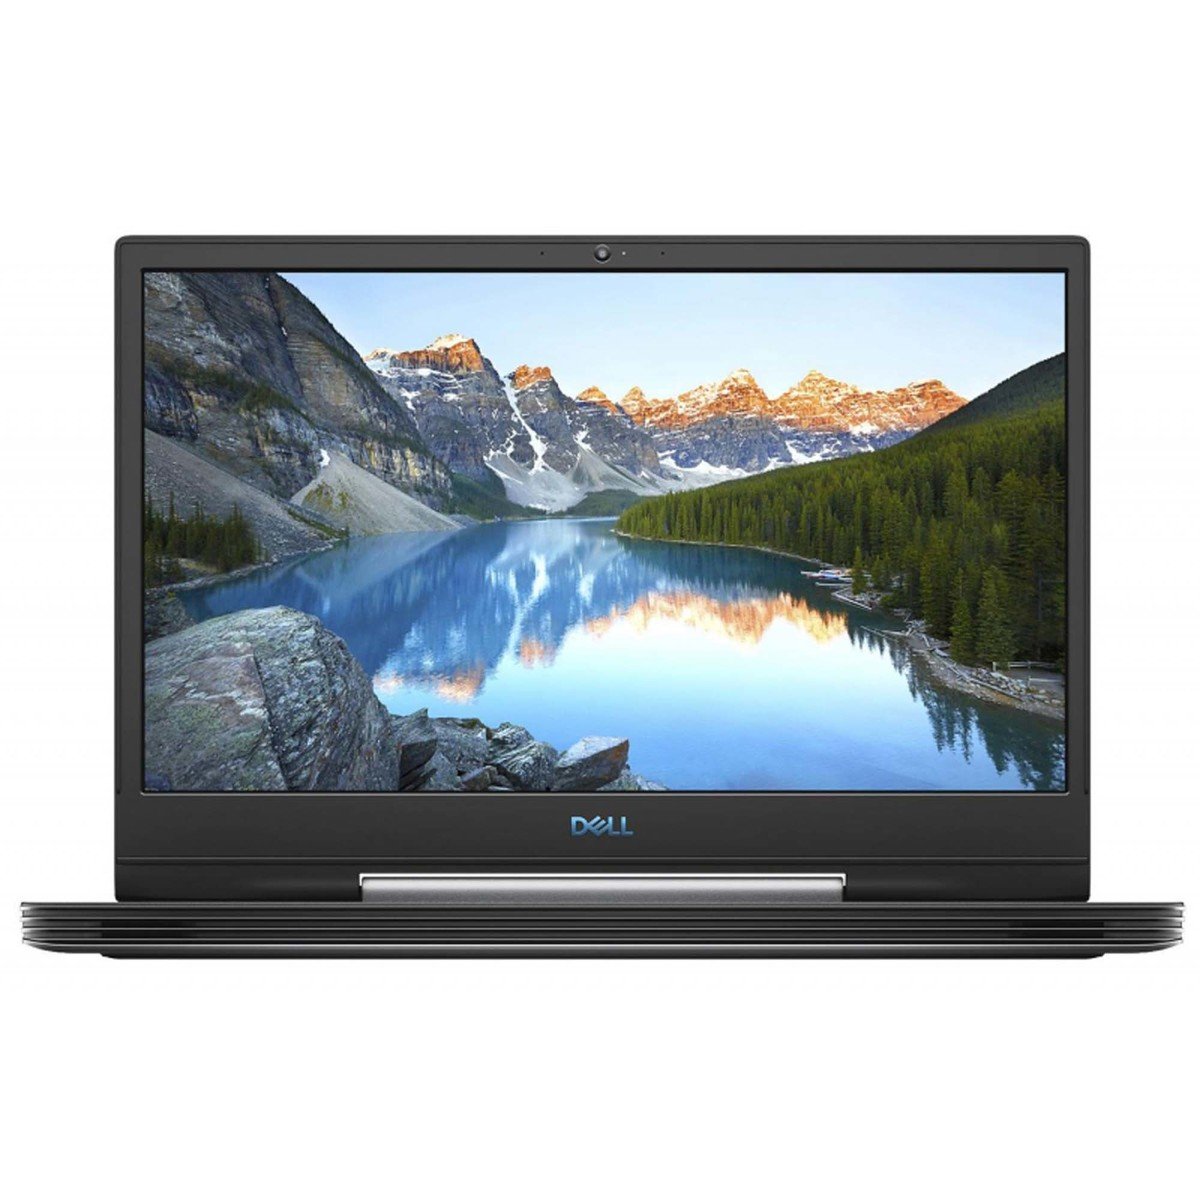 Dell G5-1277 Gaming Laptop i7-9750H,1TB HDD,16GB RAM,256GB SSD,Nvidia GTX 1650 4 GB,15.6 FHD,Windows10,Black